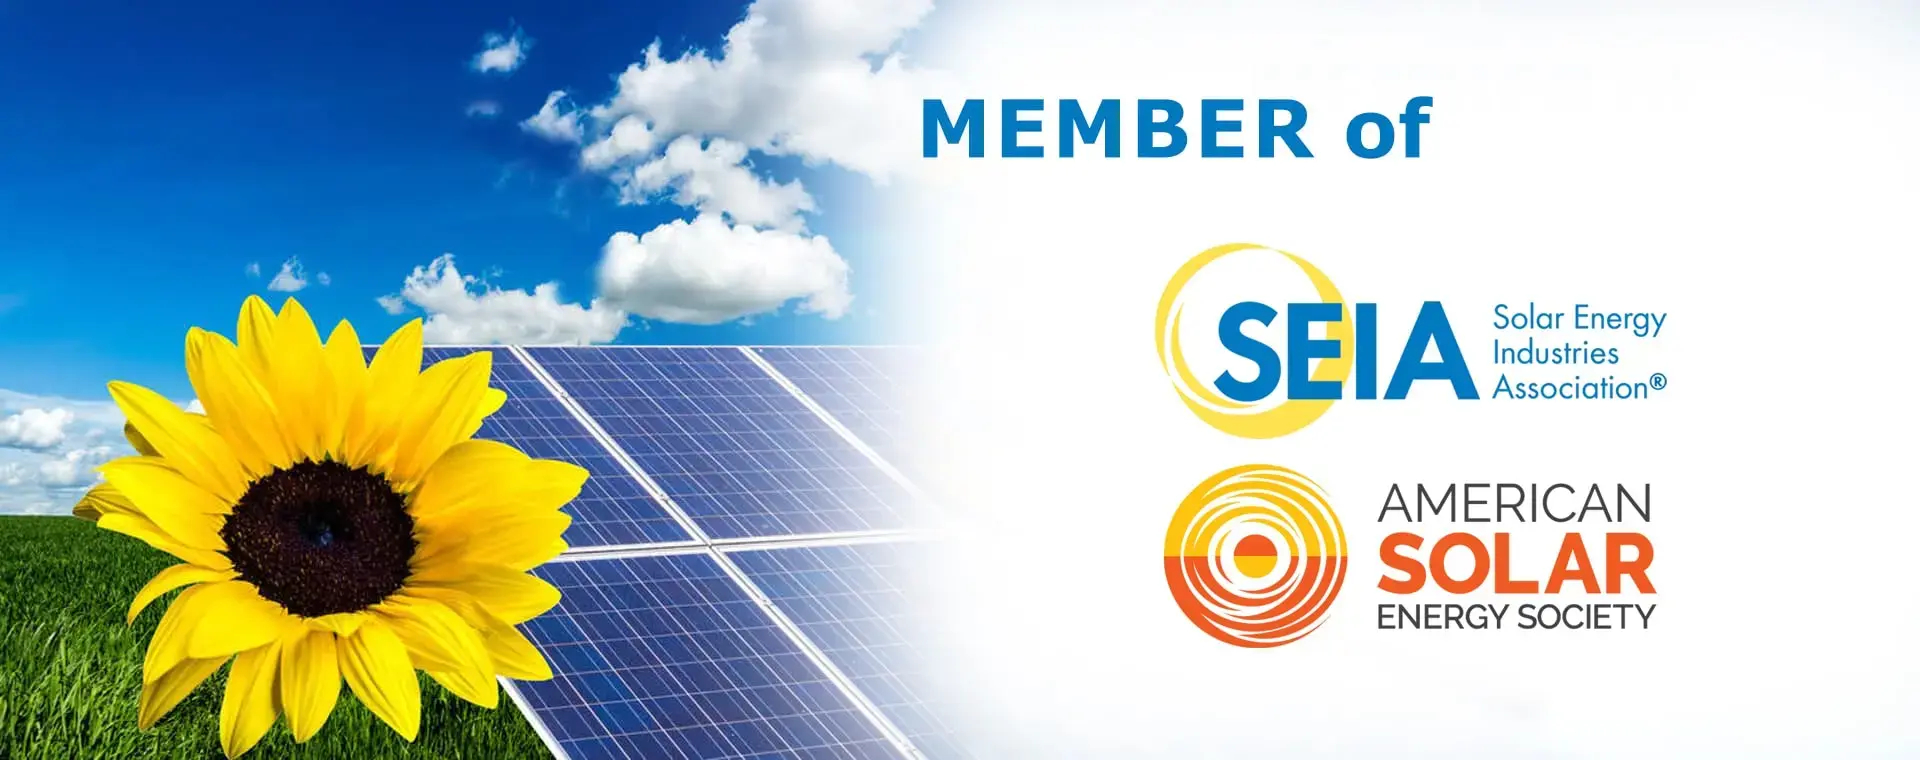 Member of SEIA, American Solar Energy Society